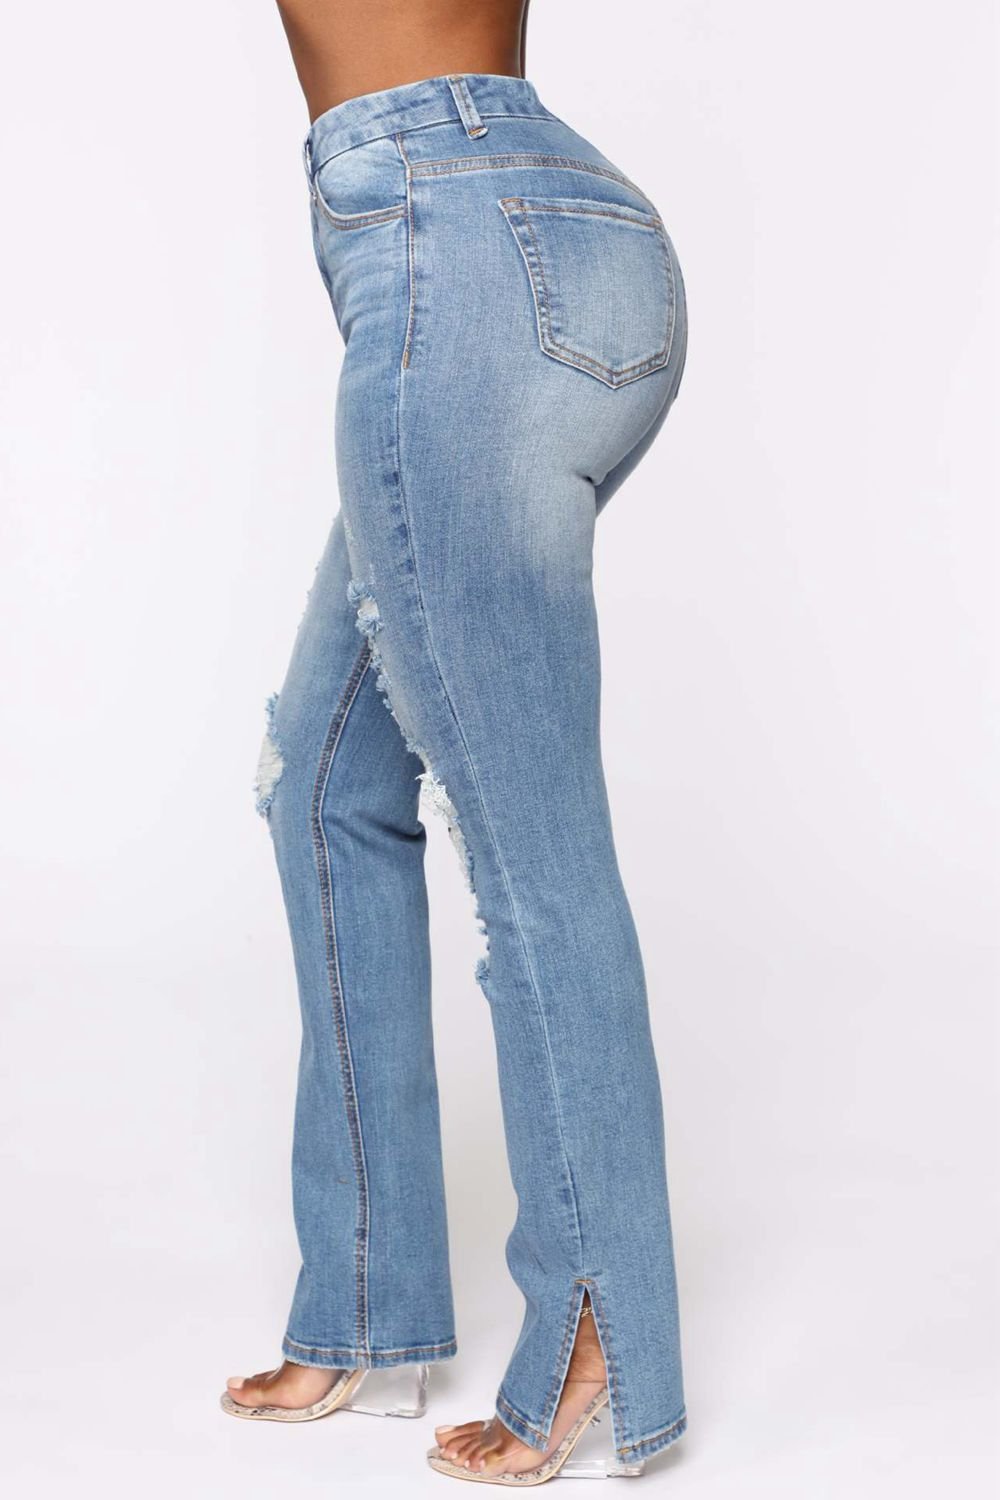 Distressed Slit Jeans - GemThreads Boutique